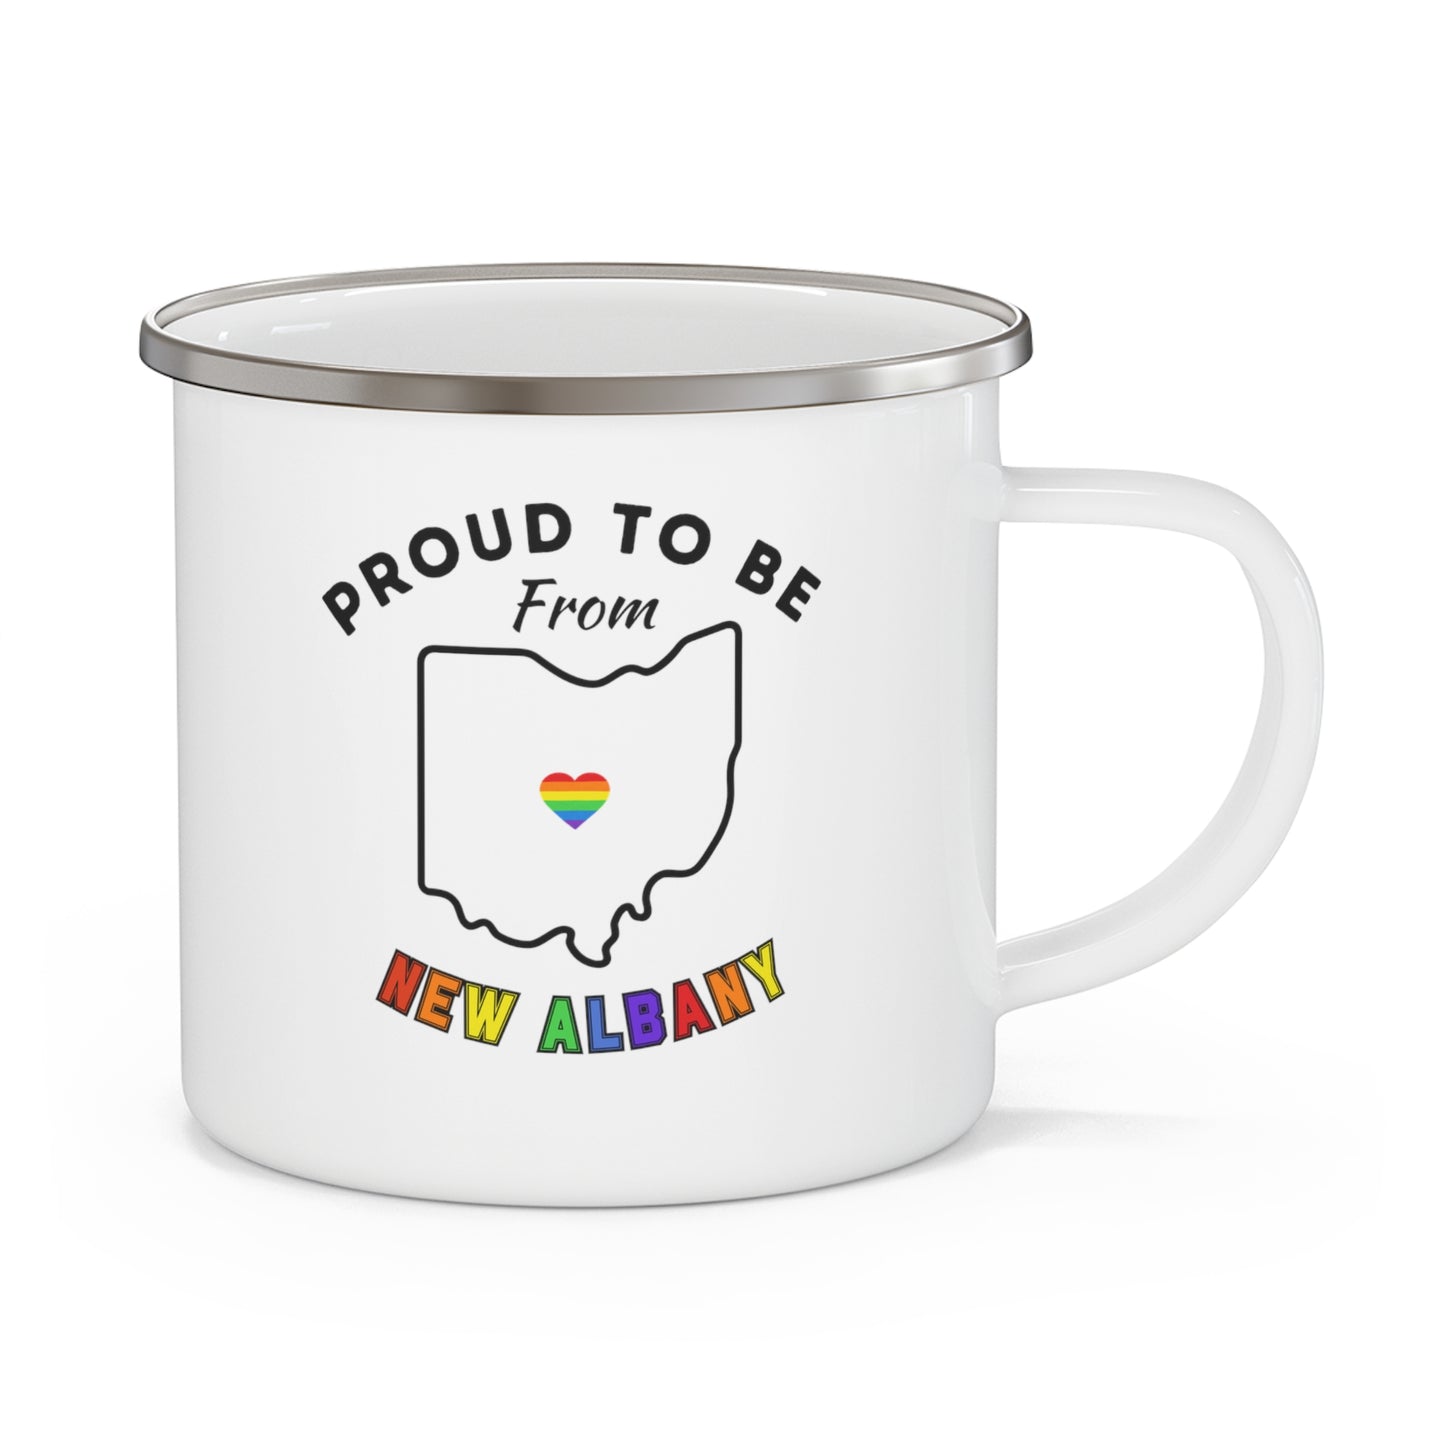 City Rainbow Pride Enamel Camping Mug - New Albany